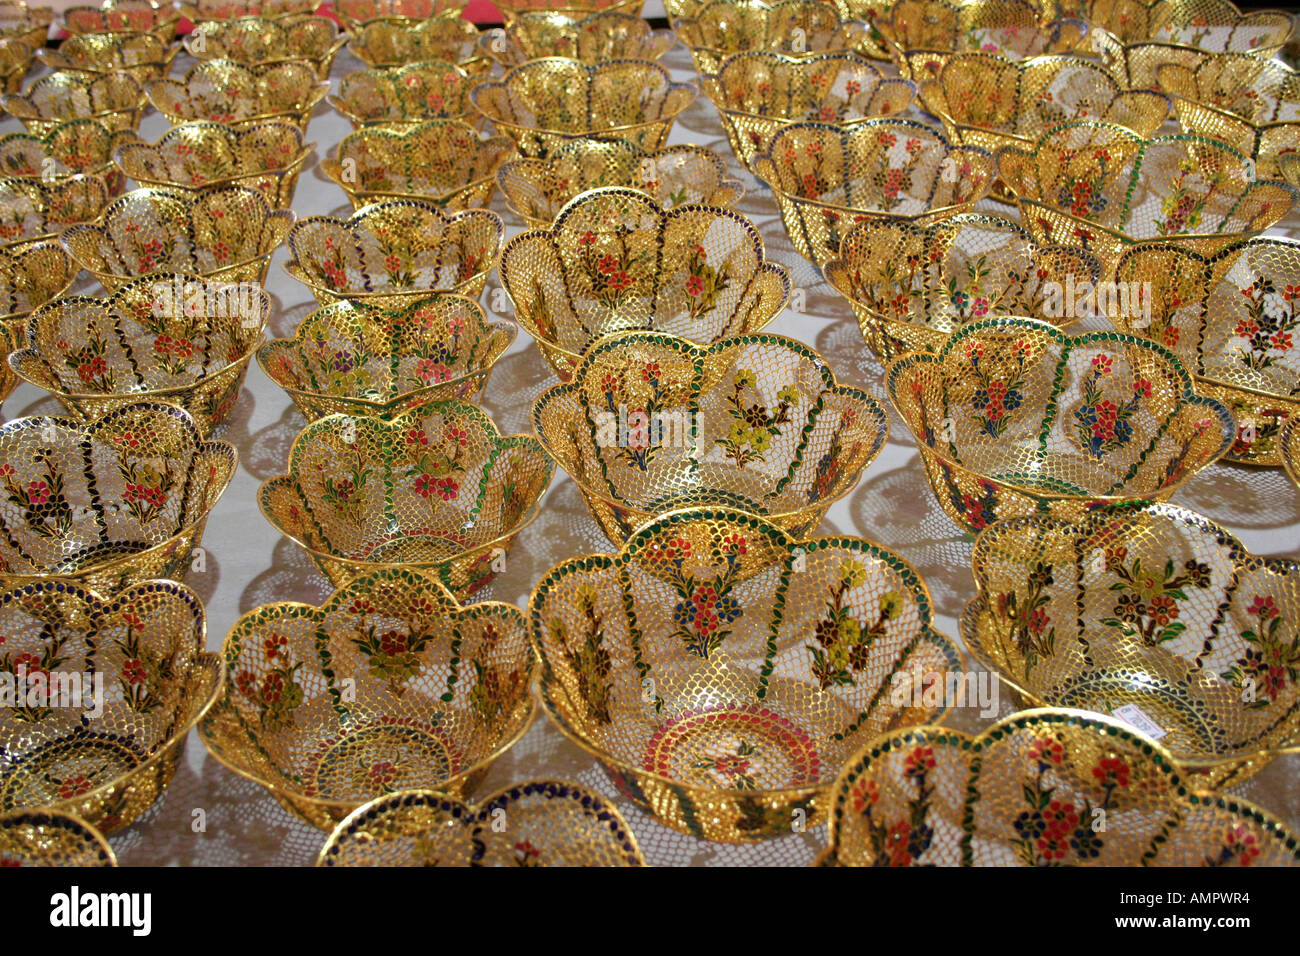 Very fine golden decorative bowl - Beijing, China Stock Photo